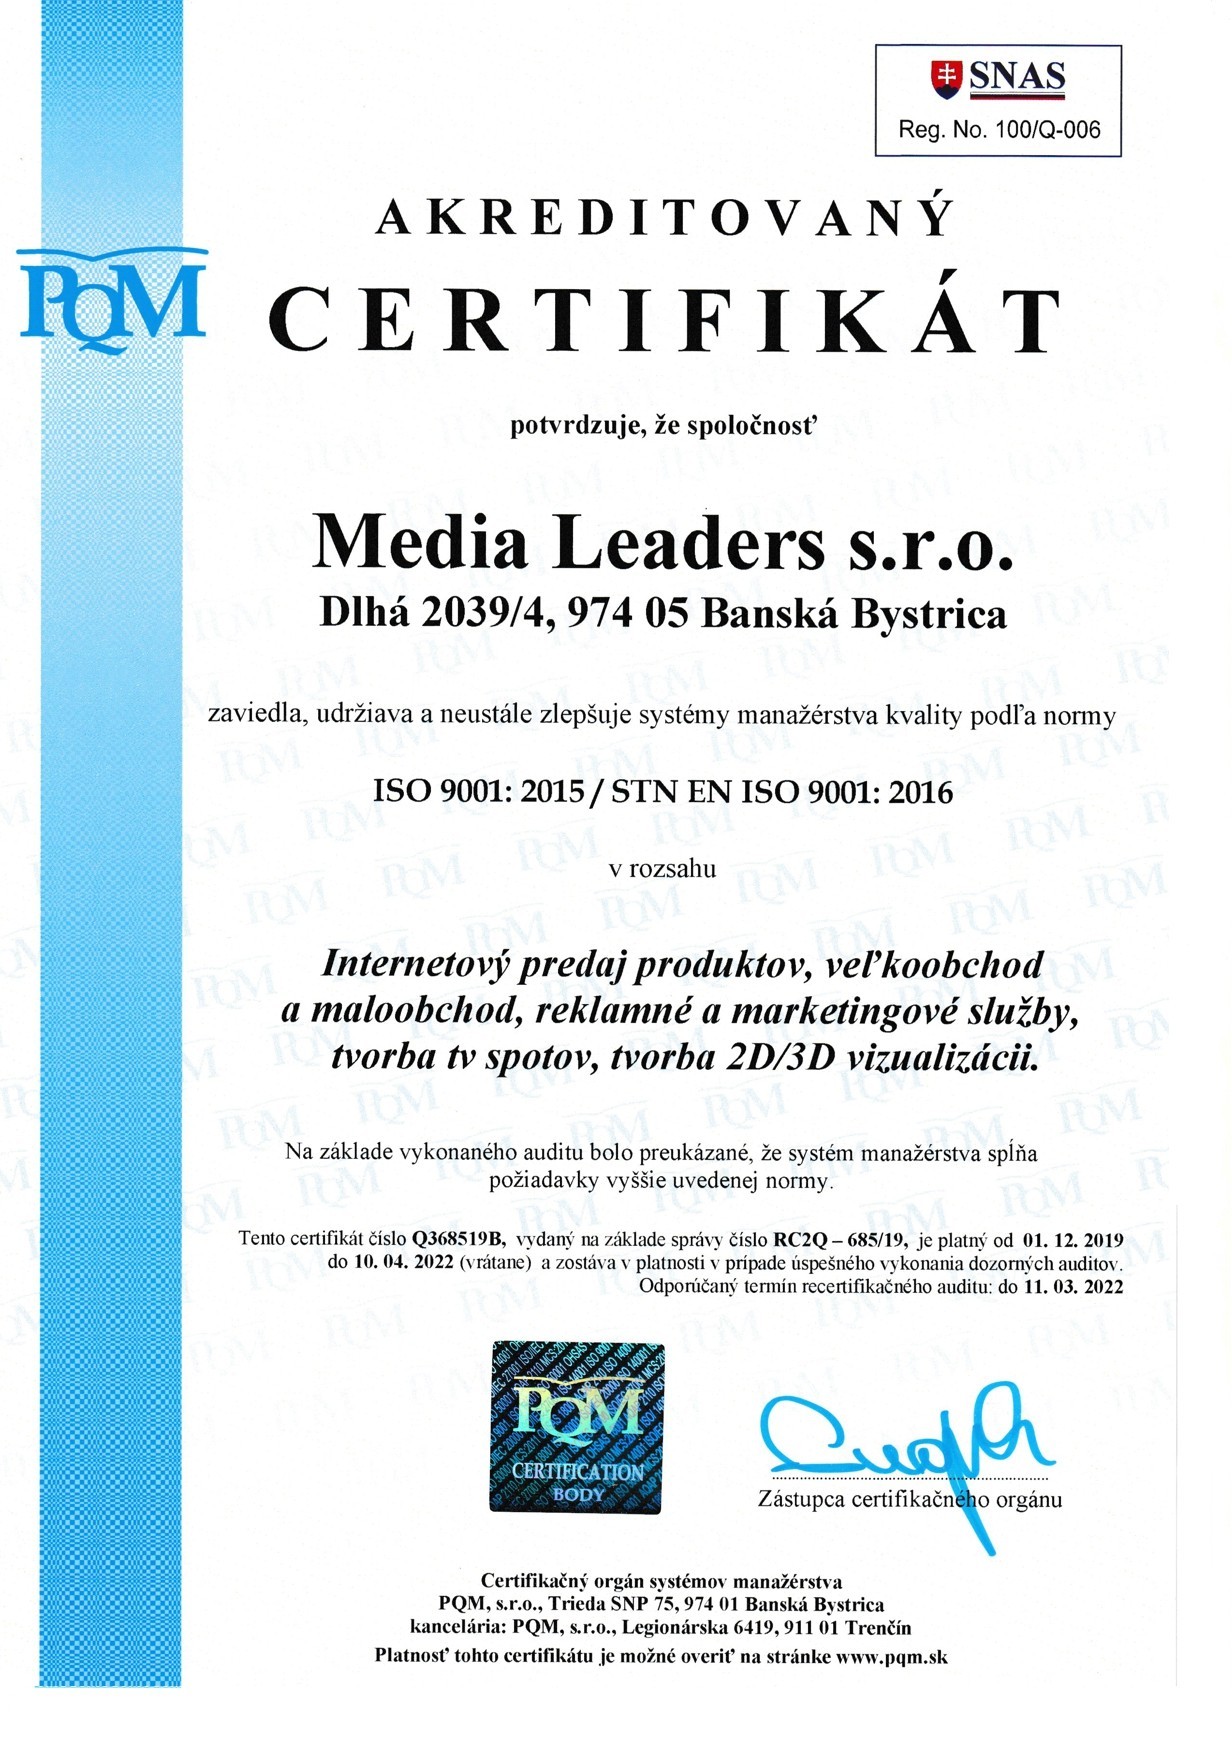 आईएसओ 9001 प्रमाणपत्र मीडिया लीडर्स एसआरओ